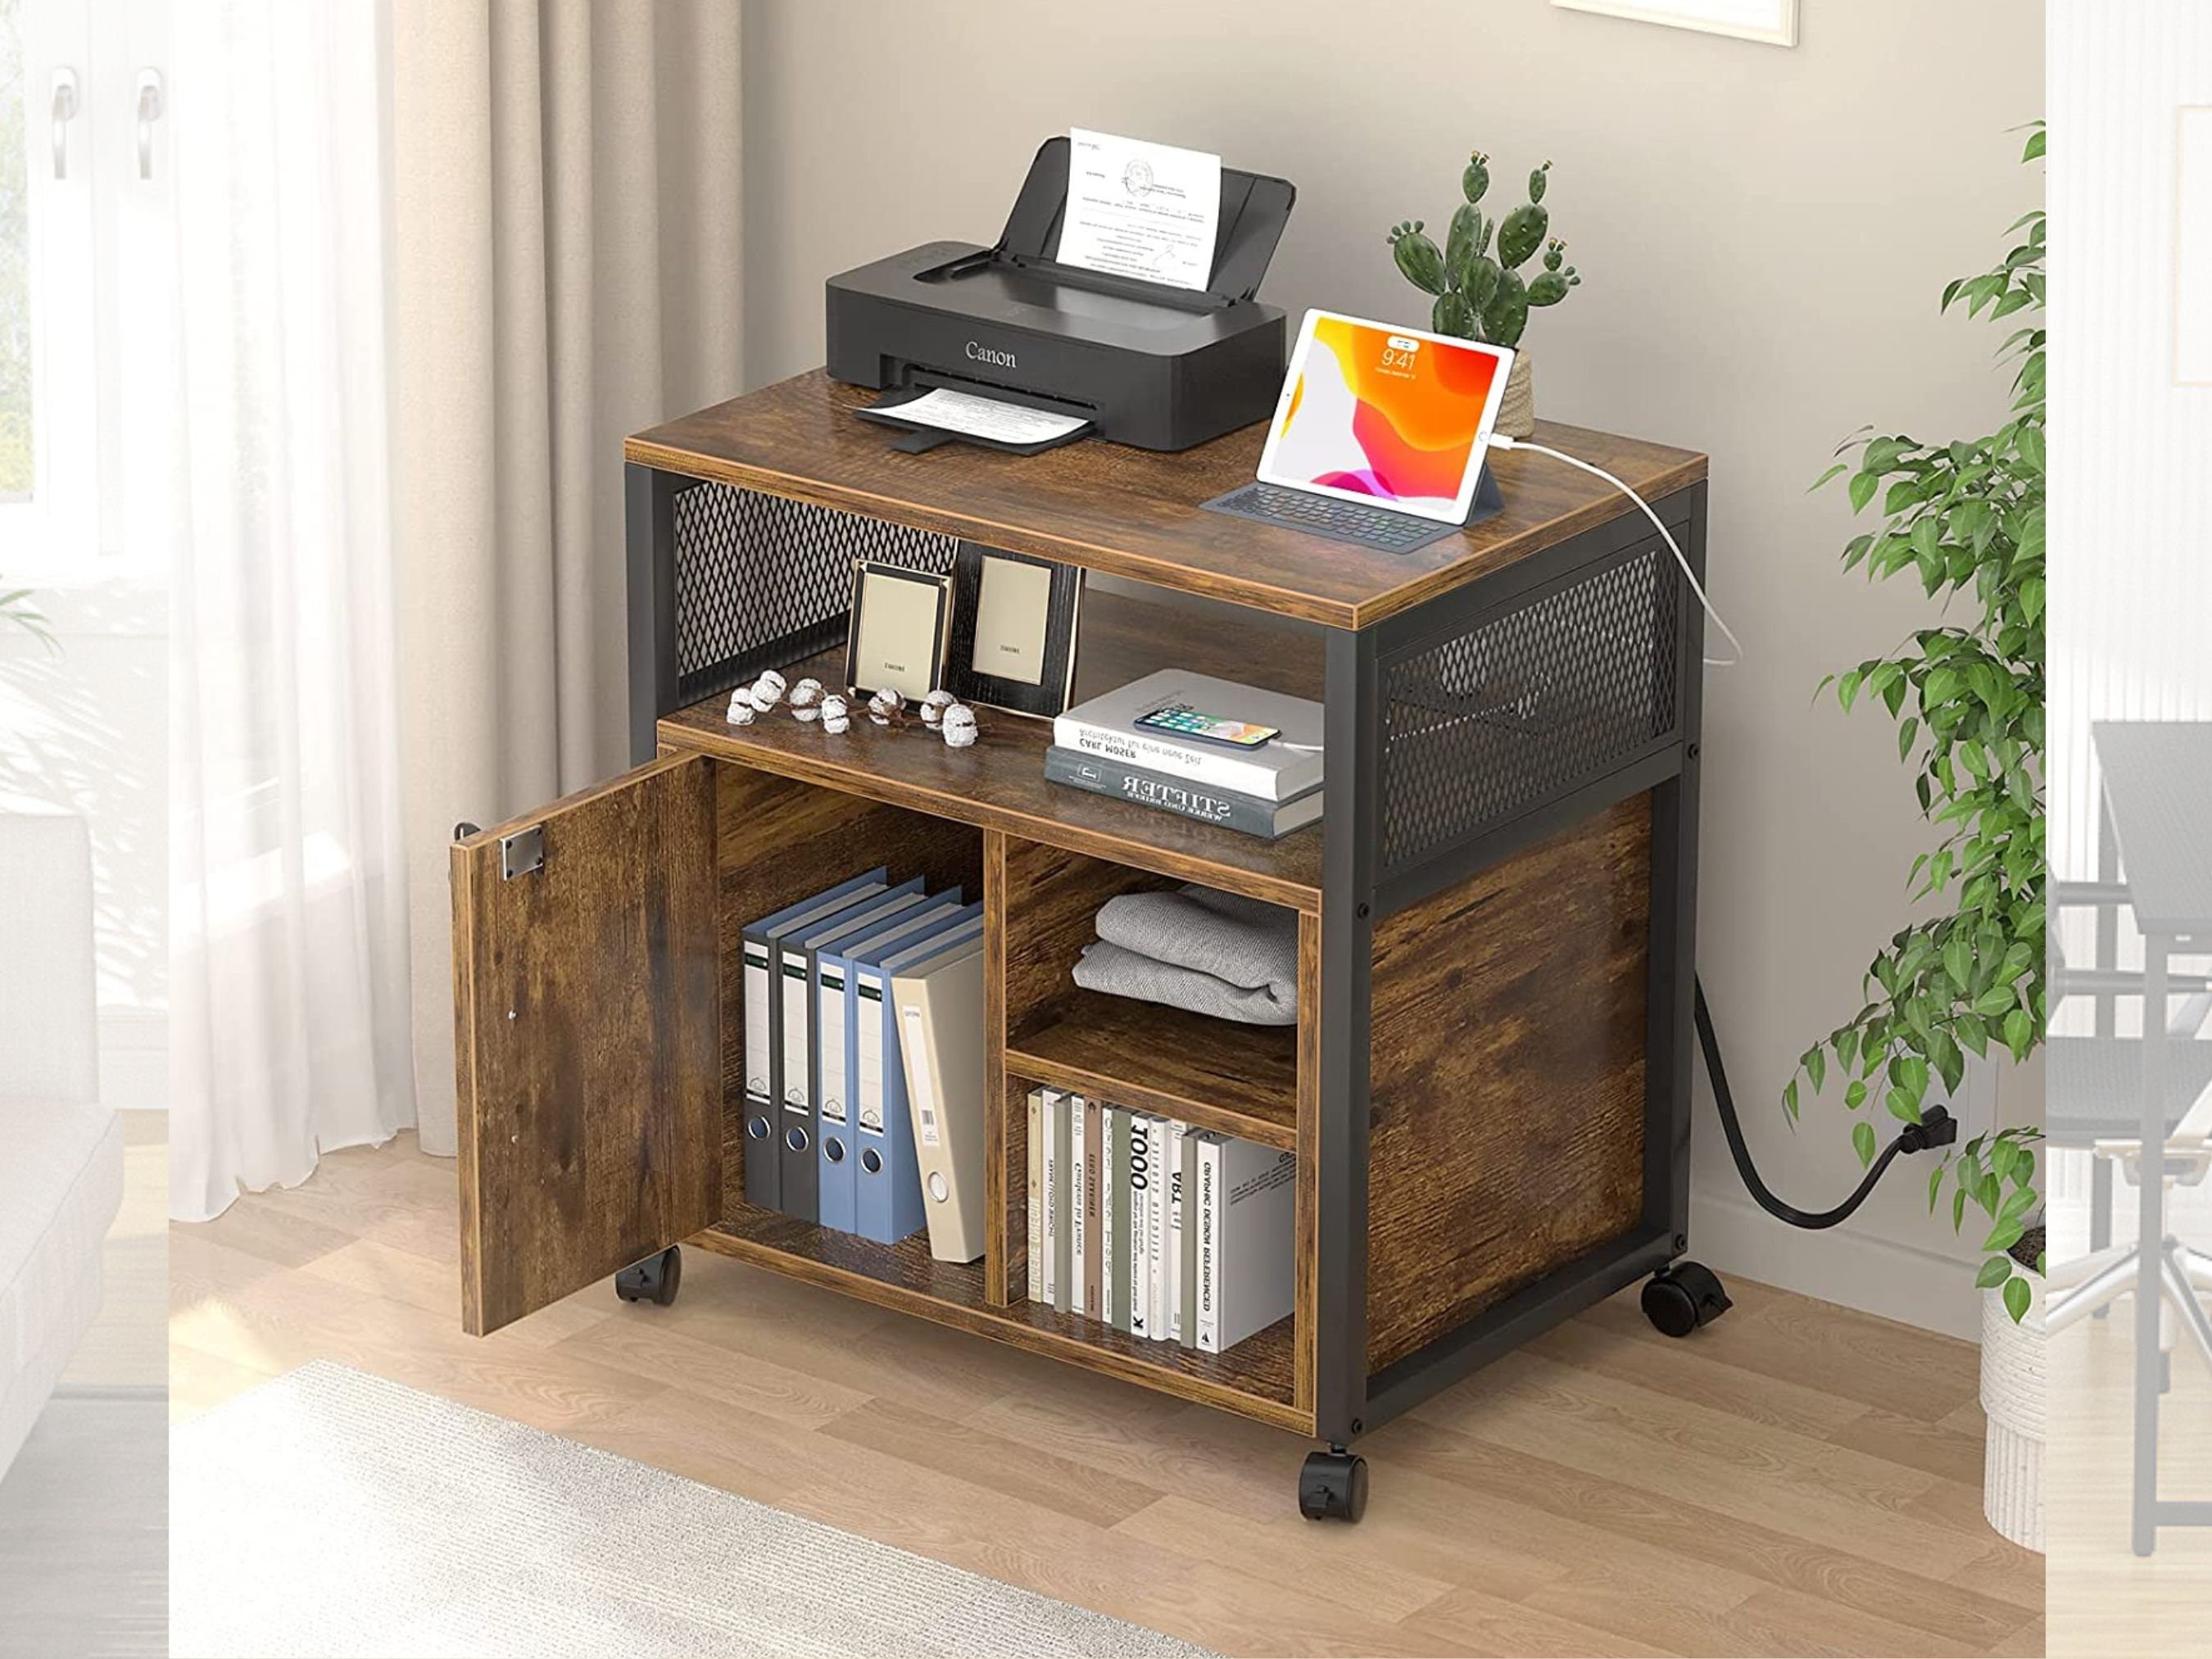 Printer Stand Office Printer Stand Wooden Fashionable Desktop Stand Desktop Storage Black Desk Organizer Large Fashionable Eco-Friendly 